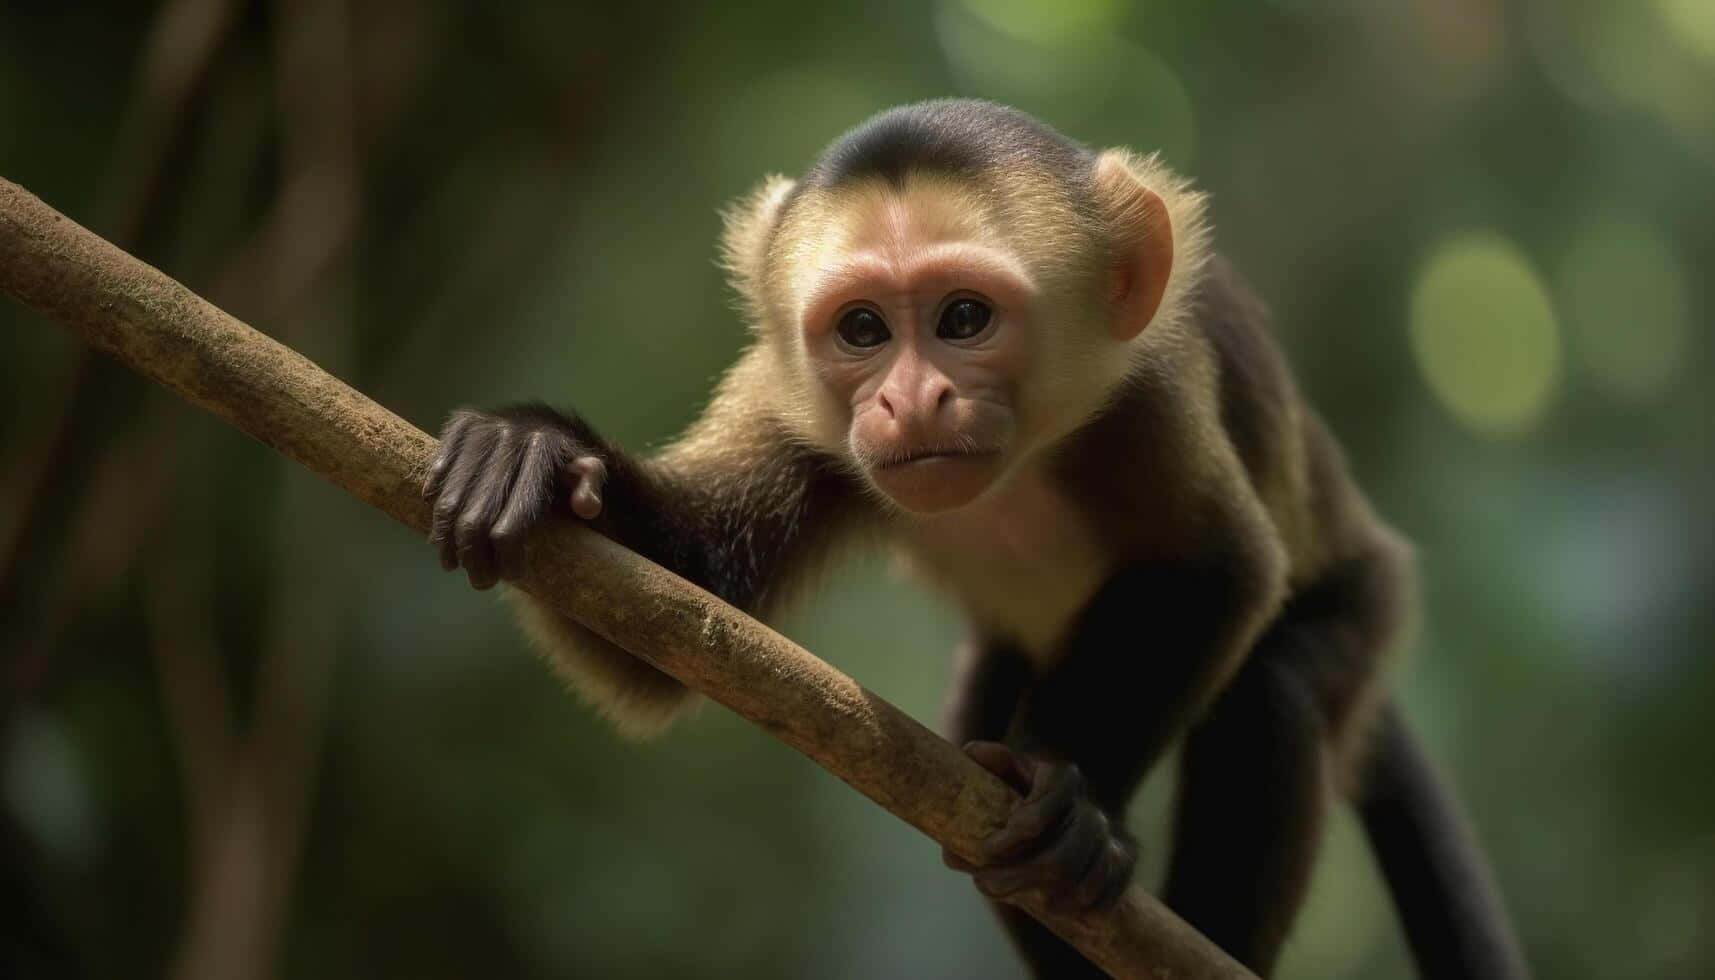 Capuchin Monkeyin Natural Habitat.jpg Wallpaper